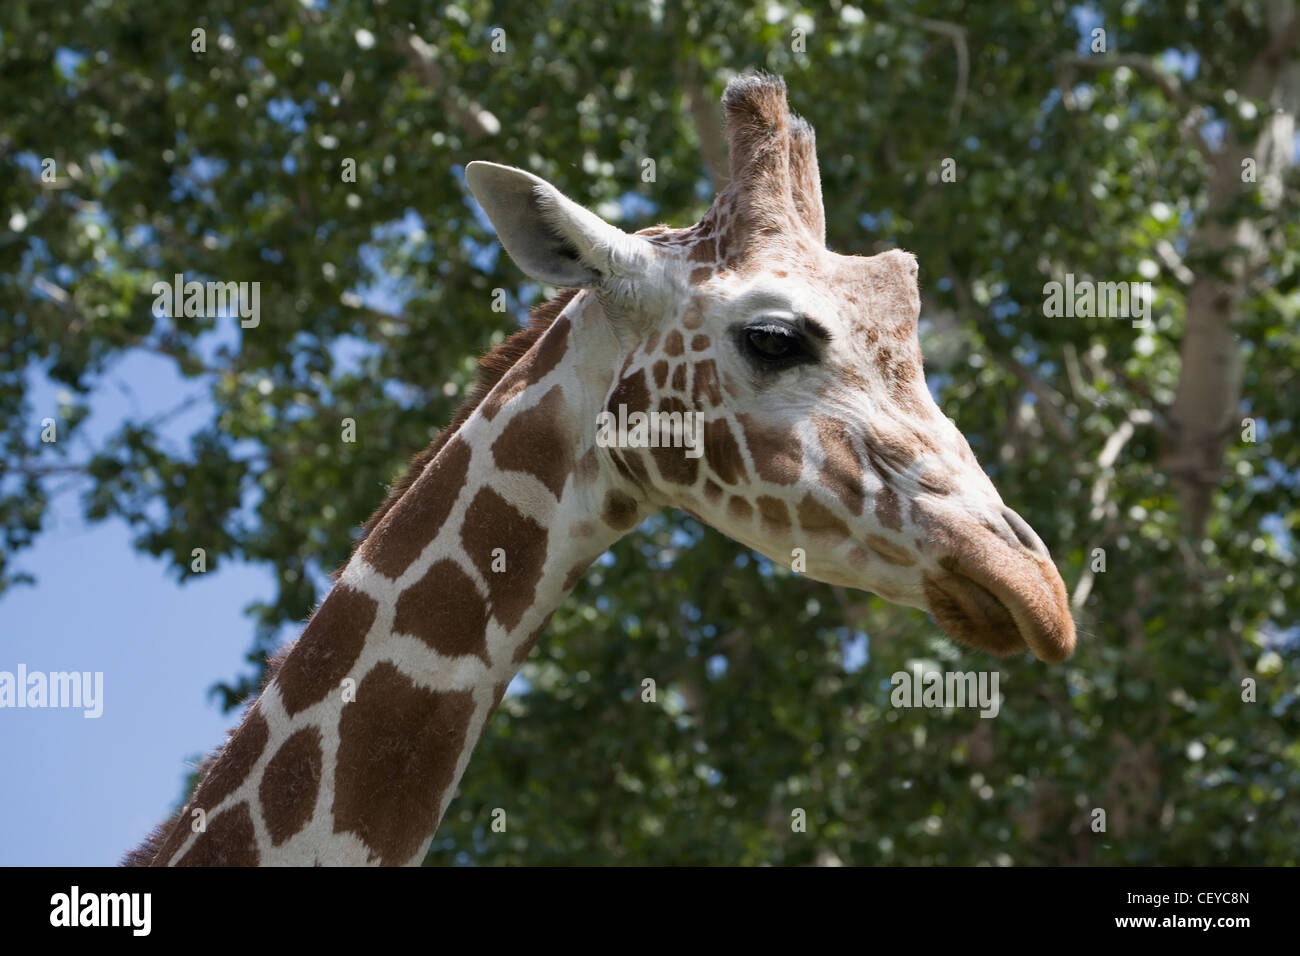 Close-up d'un profil d'une Girafe (Giraffa camelopardalis) la tête et le visage ; Calgary alberta canada Banque D'Images